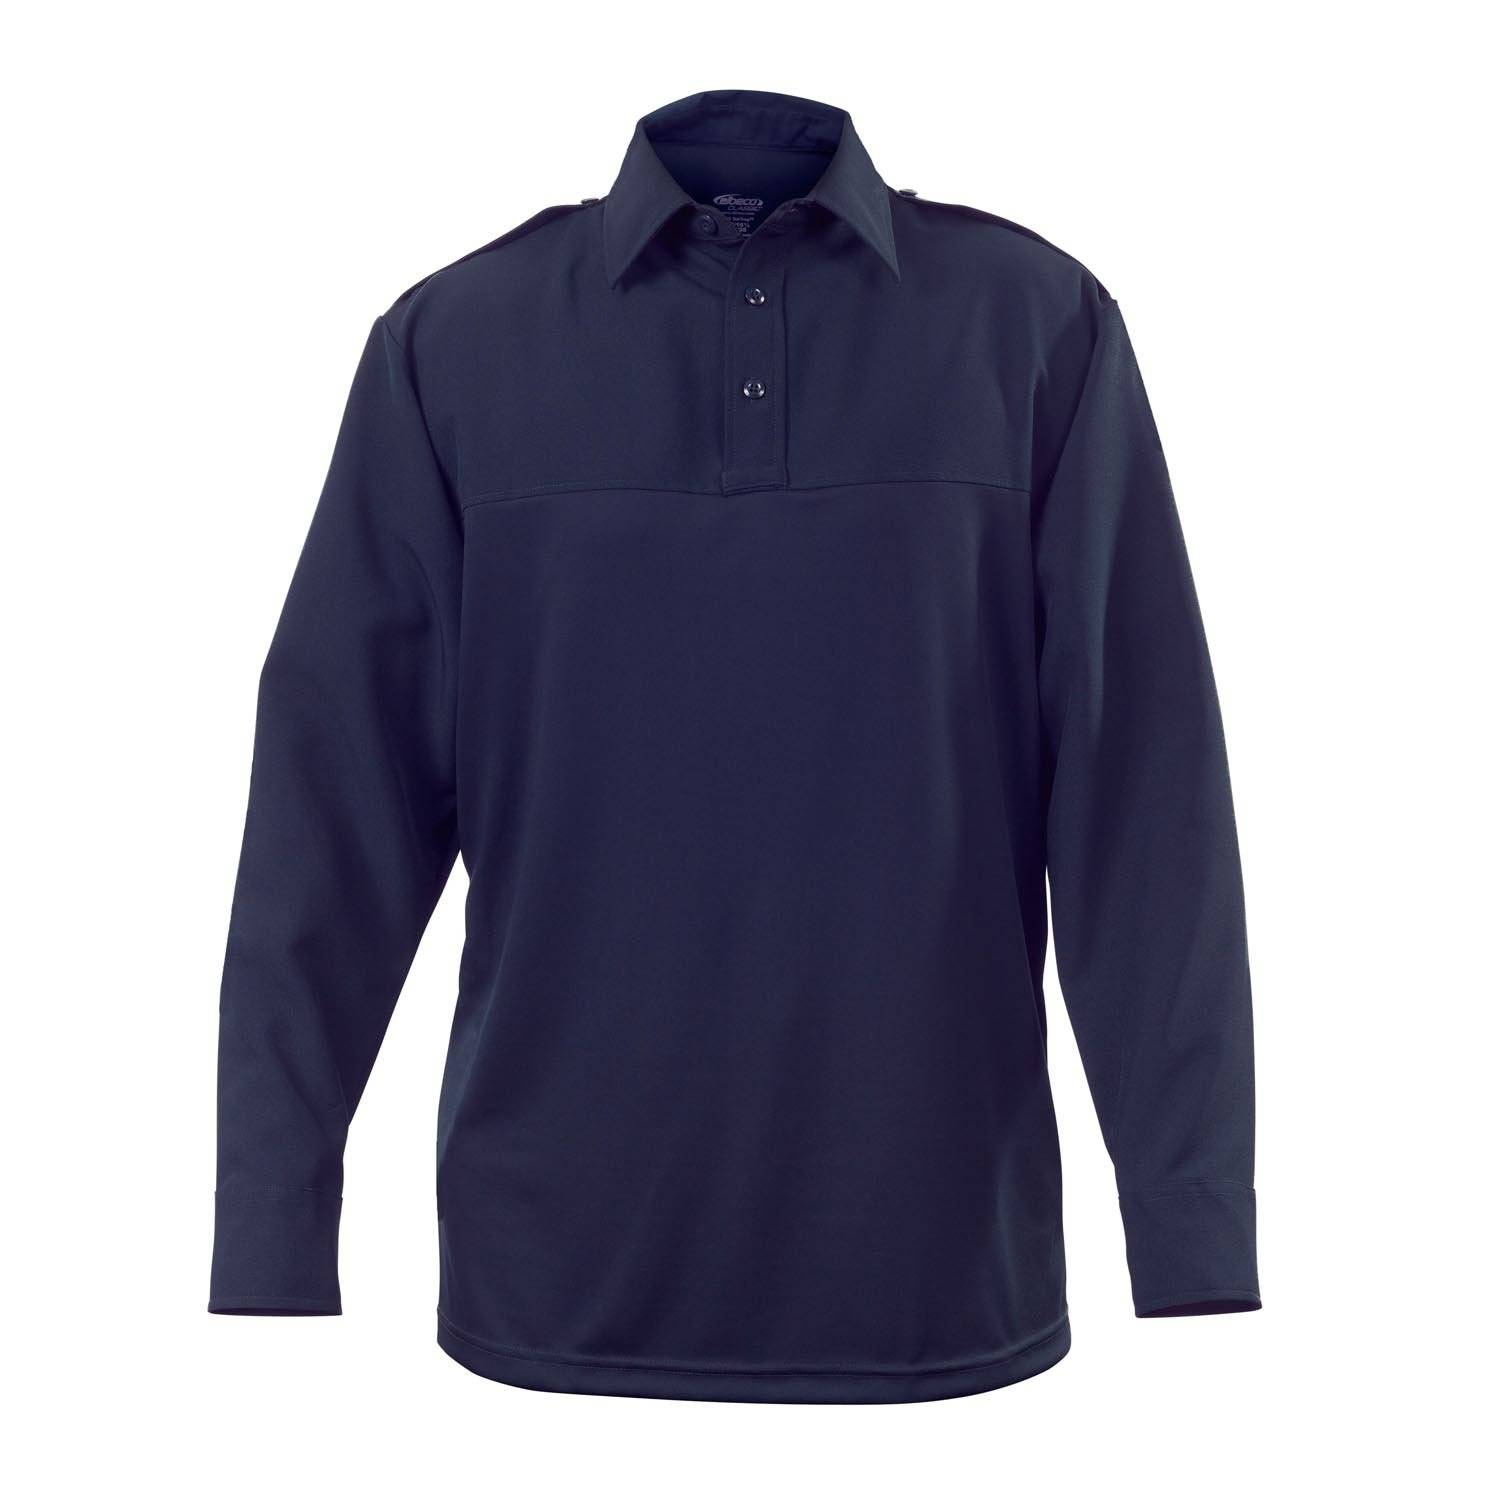 Elbeco UV1 CX360 Long Sleeve Undervest Shirt